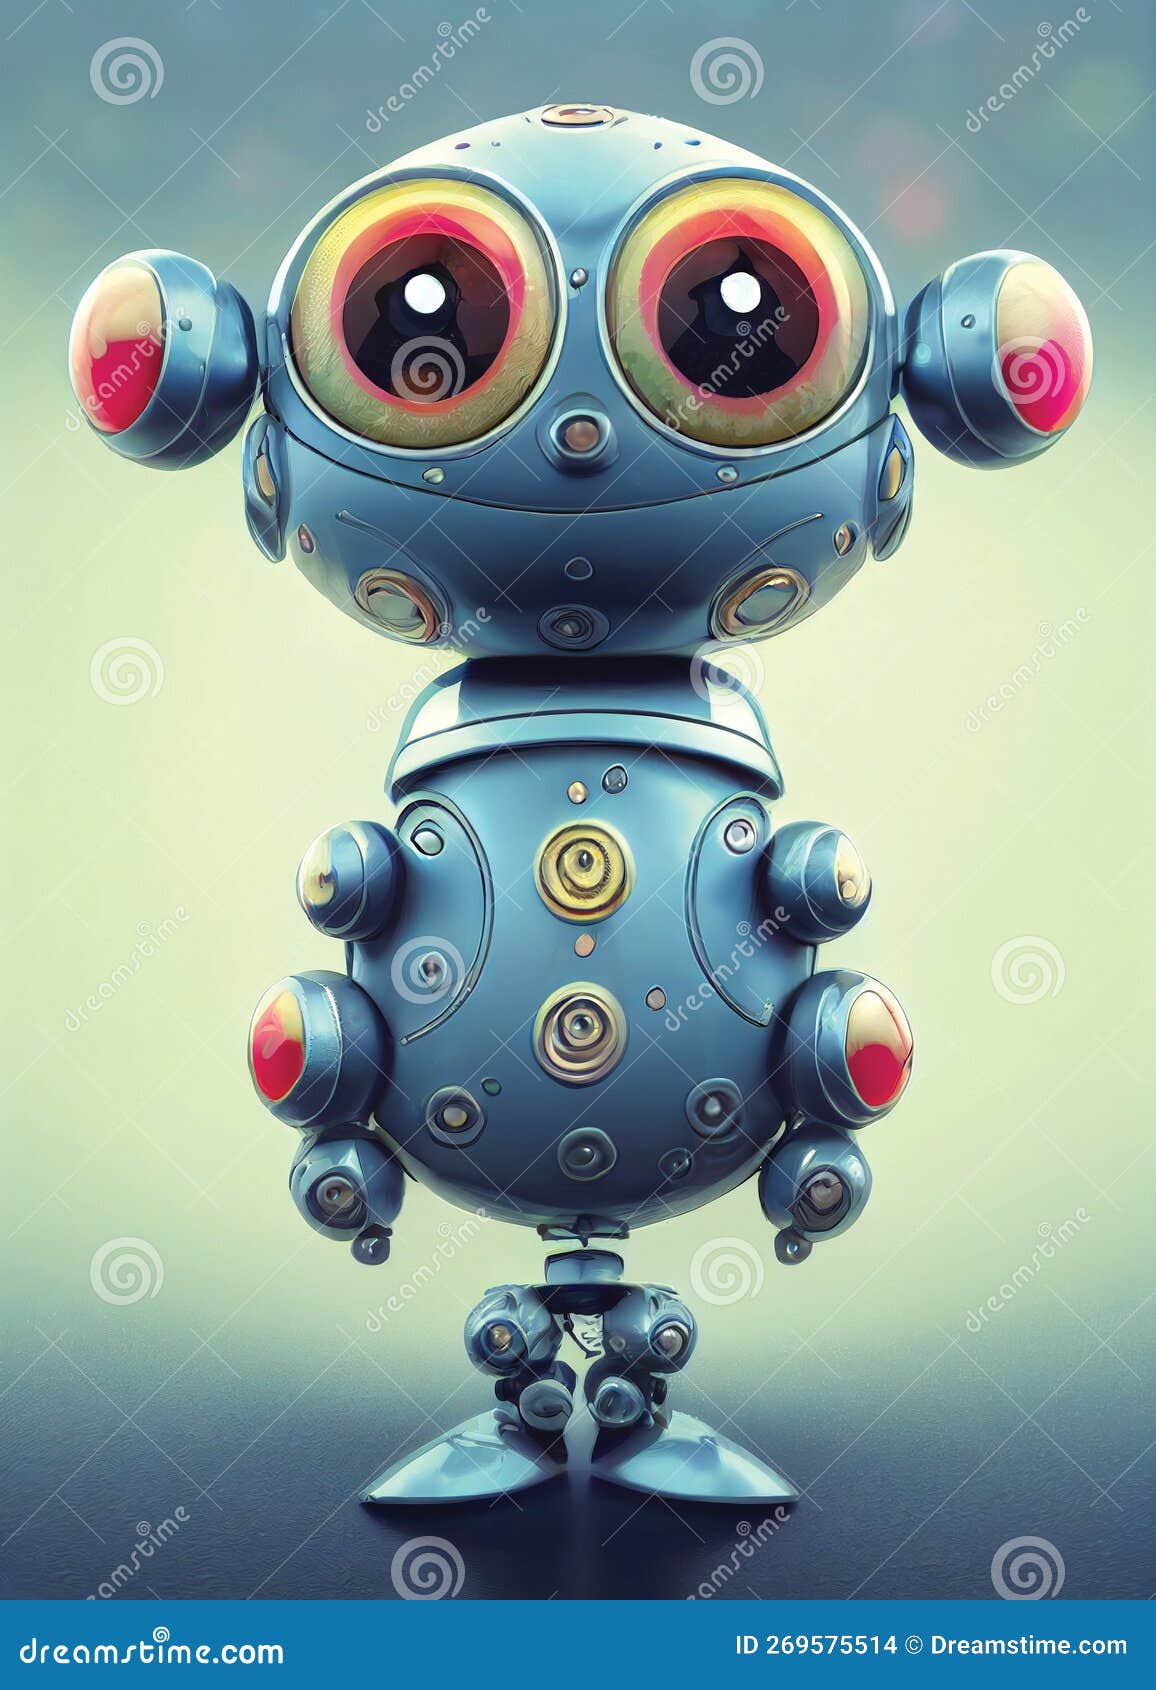 Cute Friendly Cartoon Robot with Big Eyes, Digital Art, Printable  Illustration Stock Illustration - Illustration of digital, science:  269575514